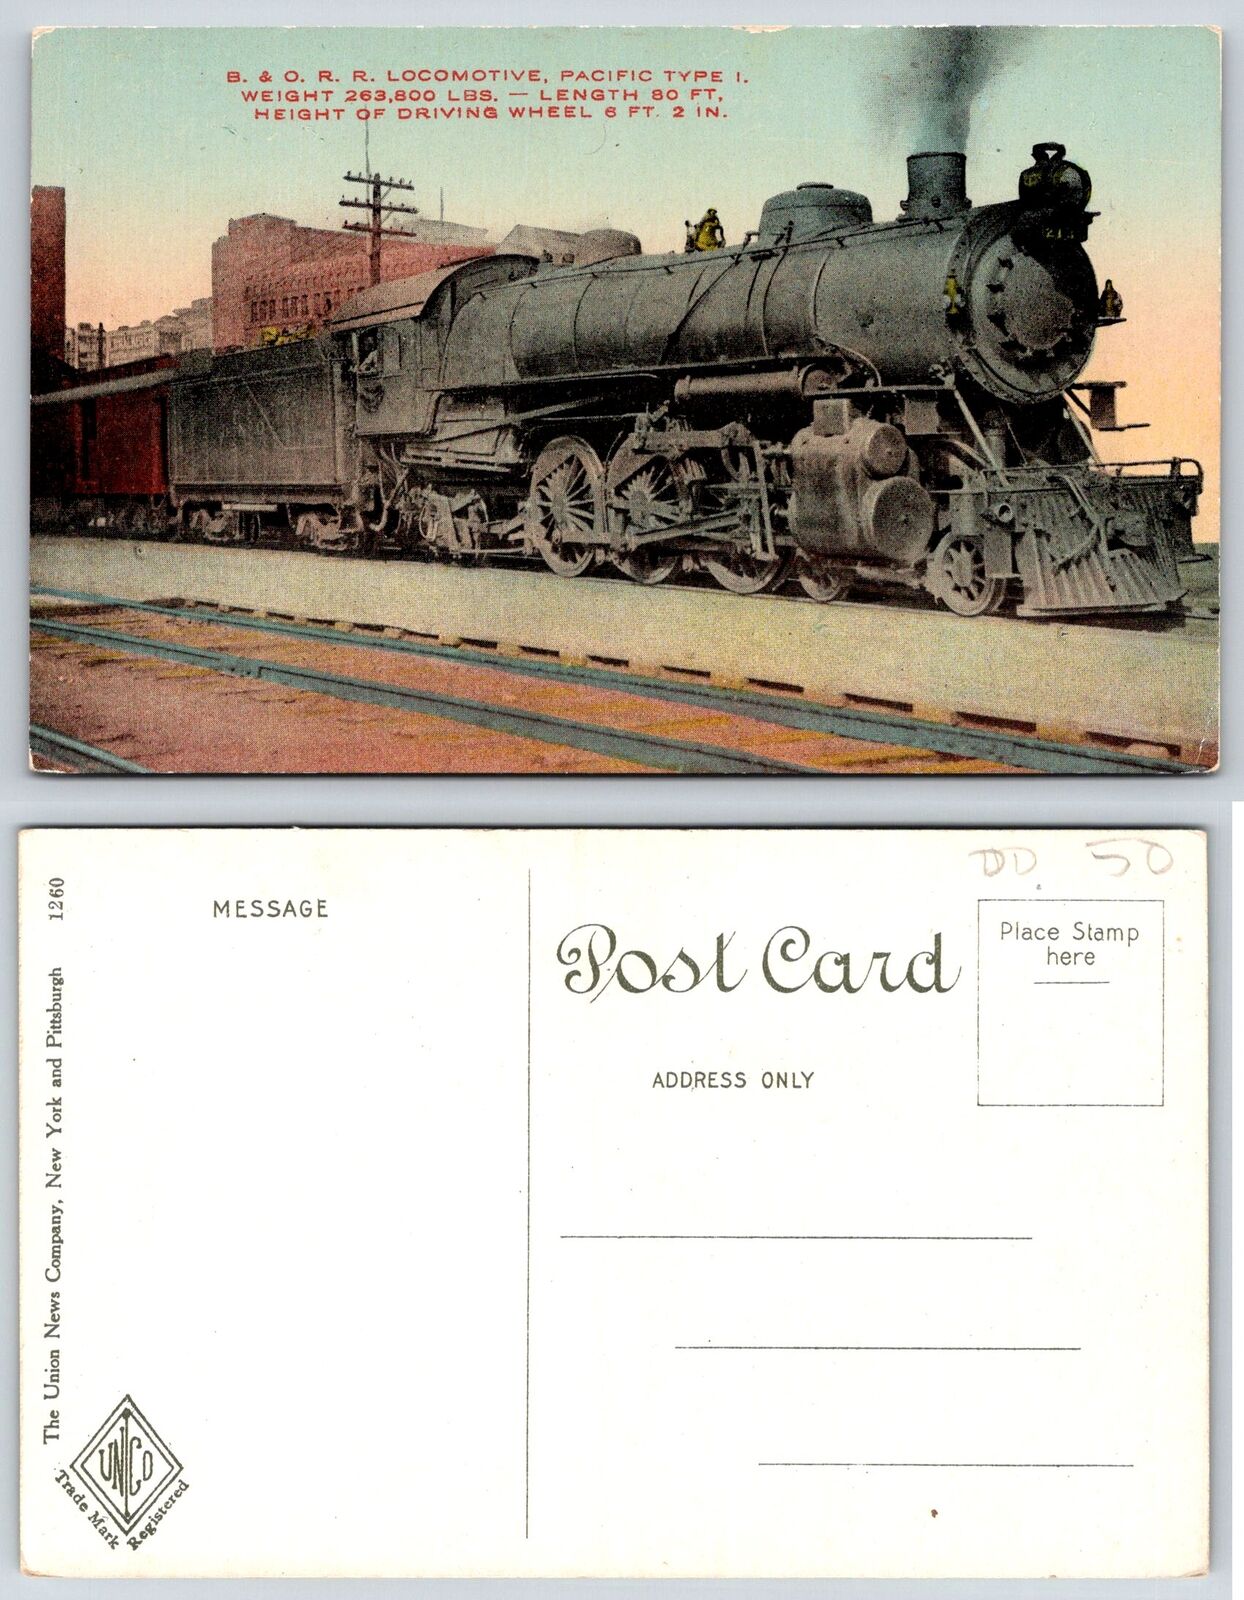 B & O R R LOCOMOTIVE PACIFIC TYPE I Postcard j946